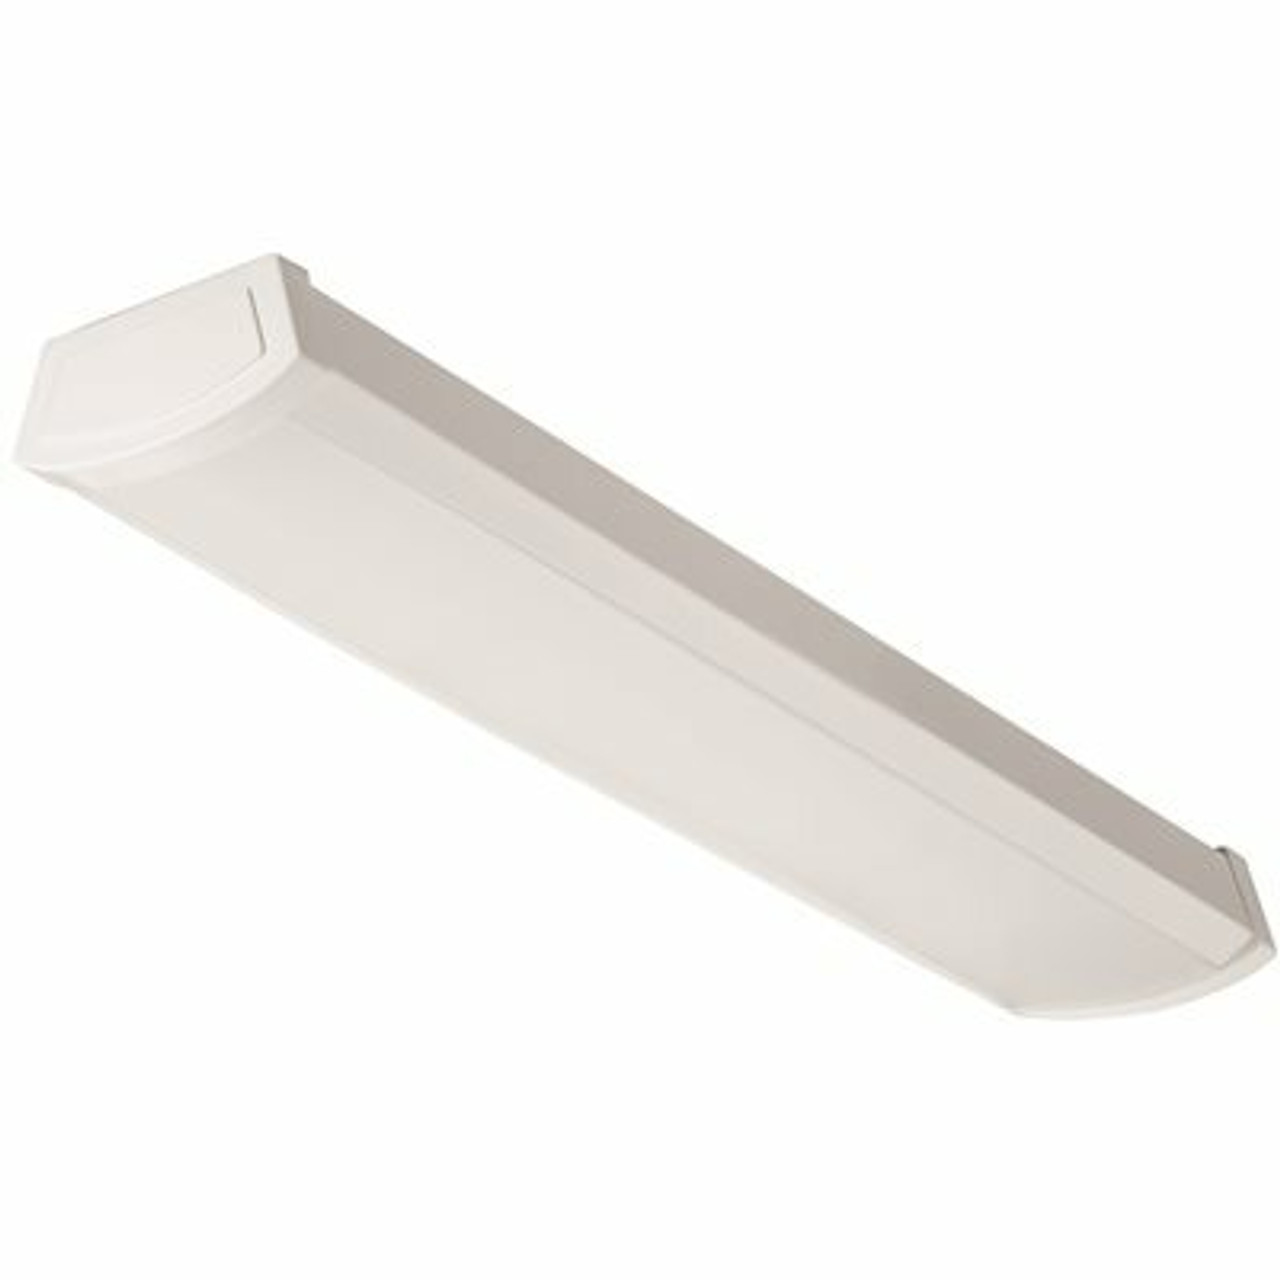 Lithonia Lighting Contractor Select Fmlwl 2 Ft. 20-Watt 1400 Lumens 4000K White Integrated Led Wrap Light Fixture